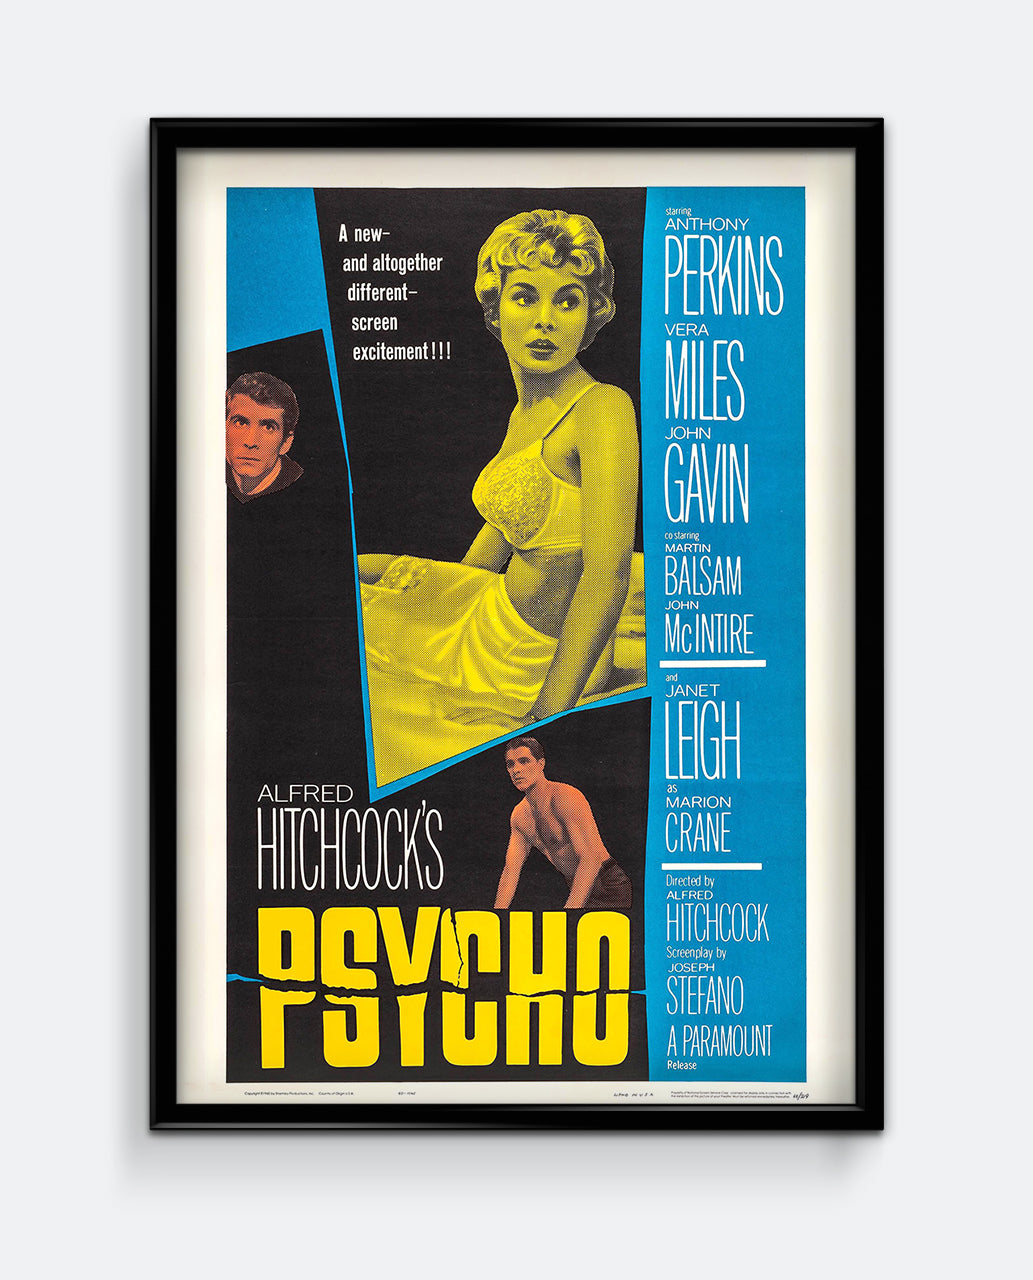 Psycho Film Poster